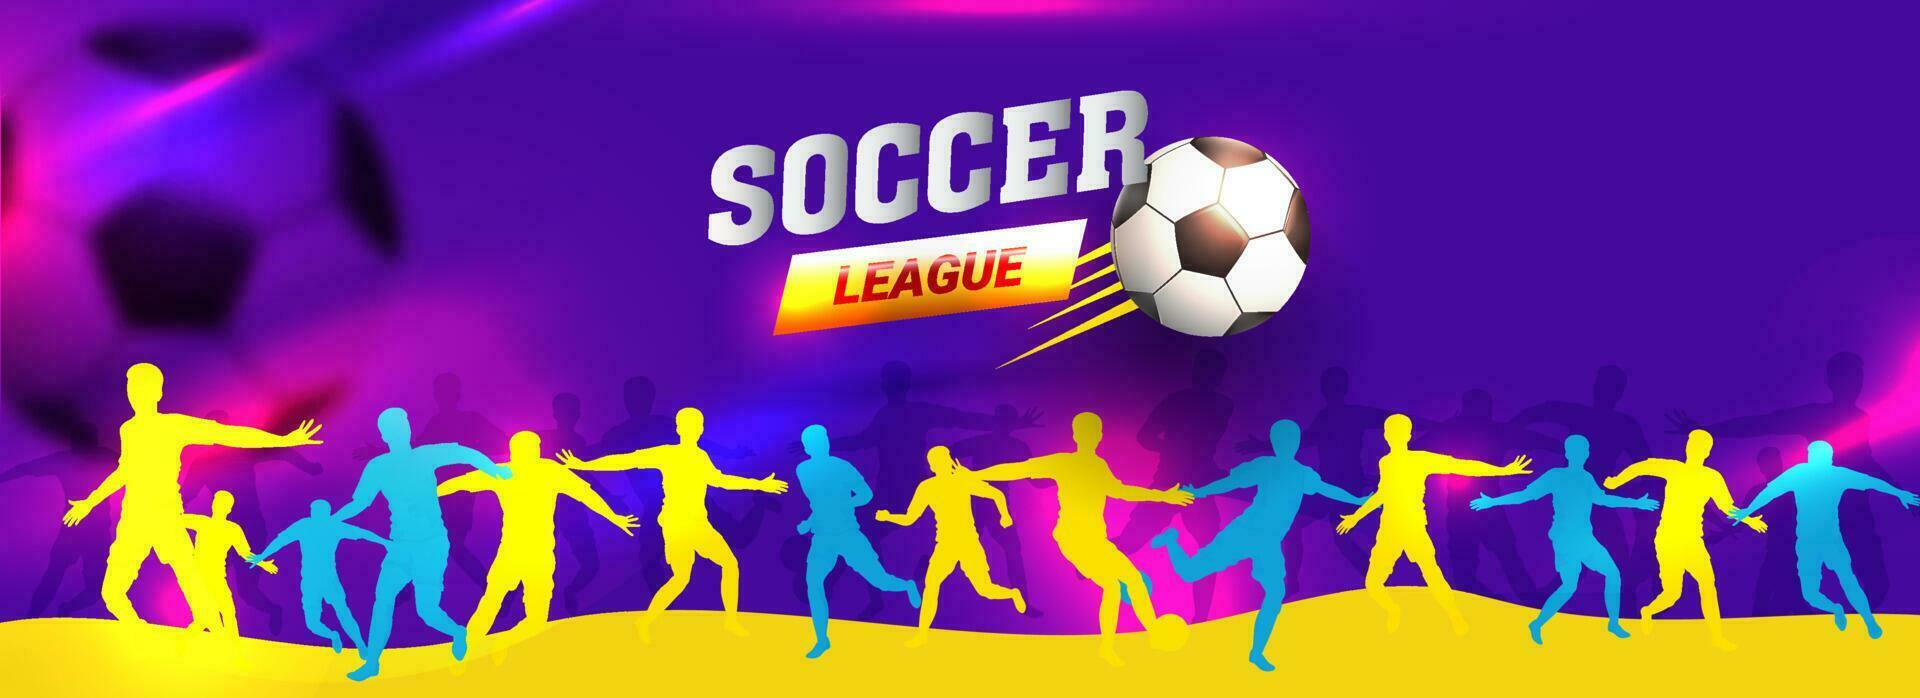 sitio web encabezamiento o bandera con silueta de fútbol americano jugadores en diferente poses para fútbol liga concepto. vector